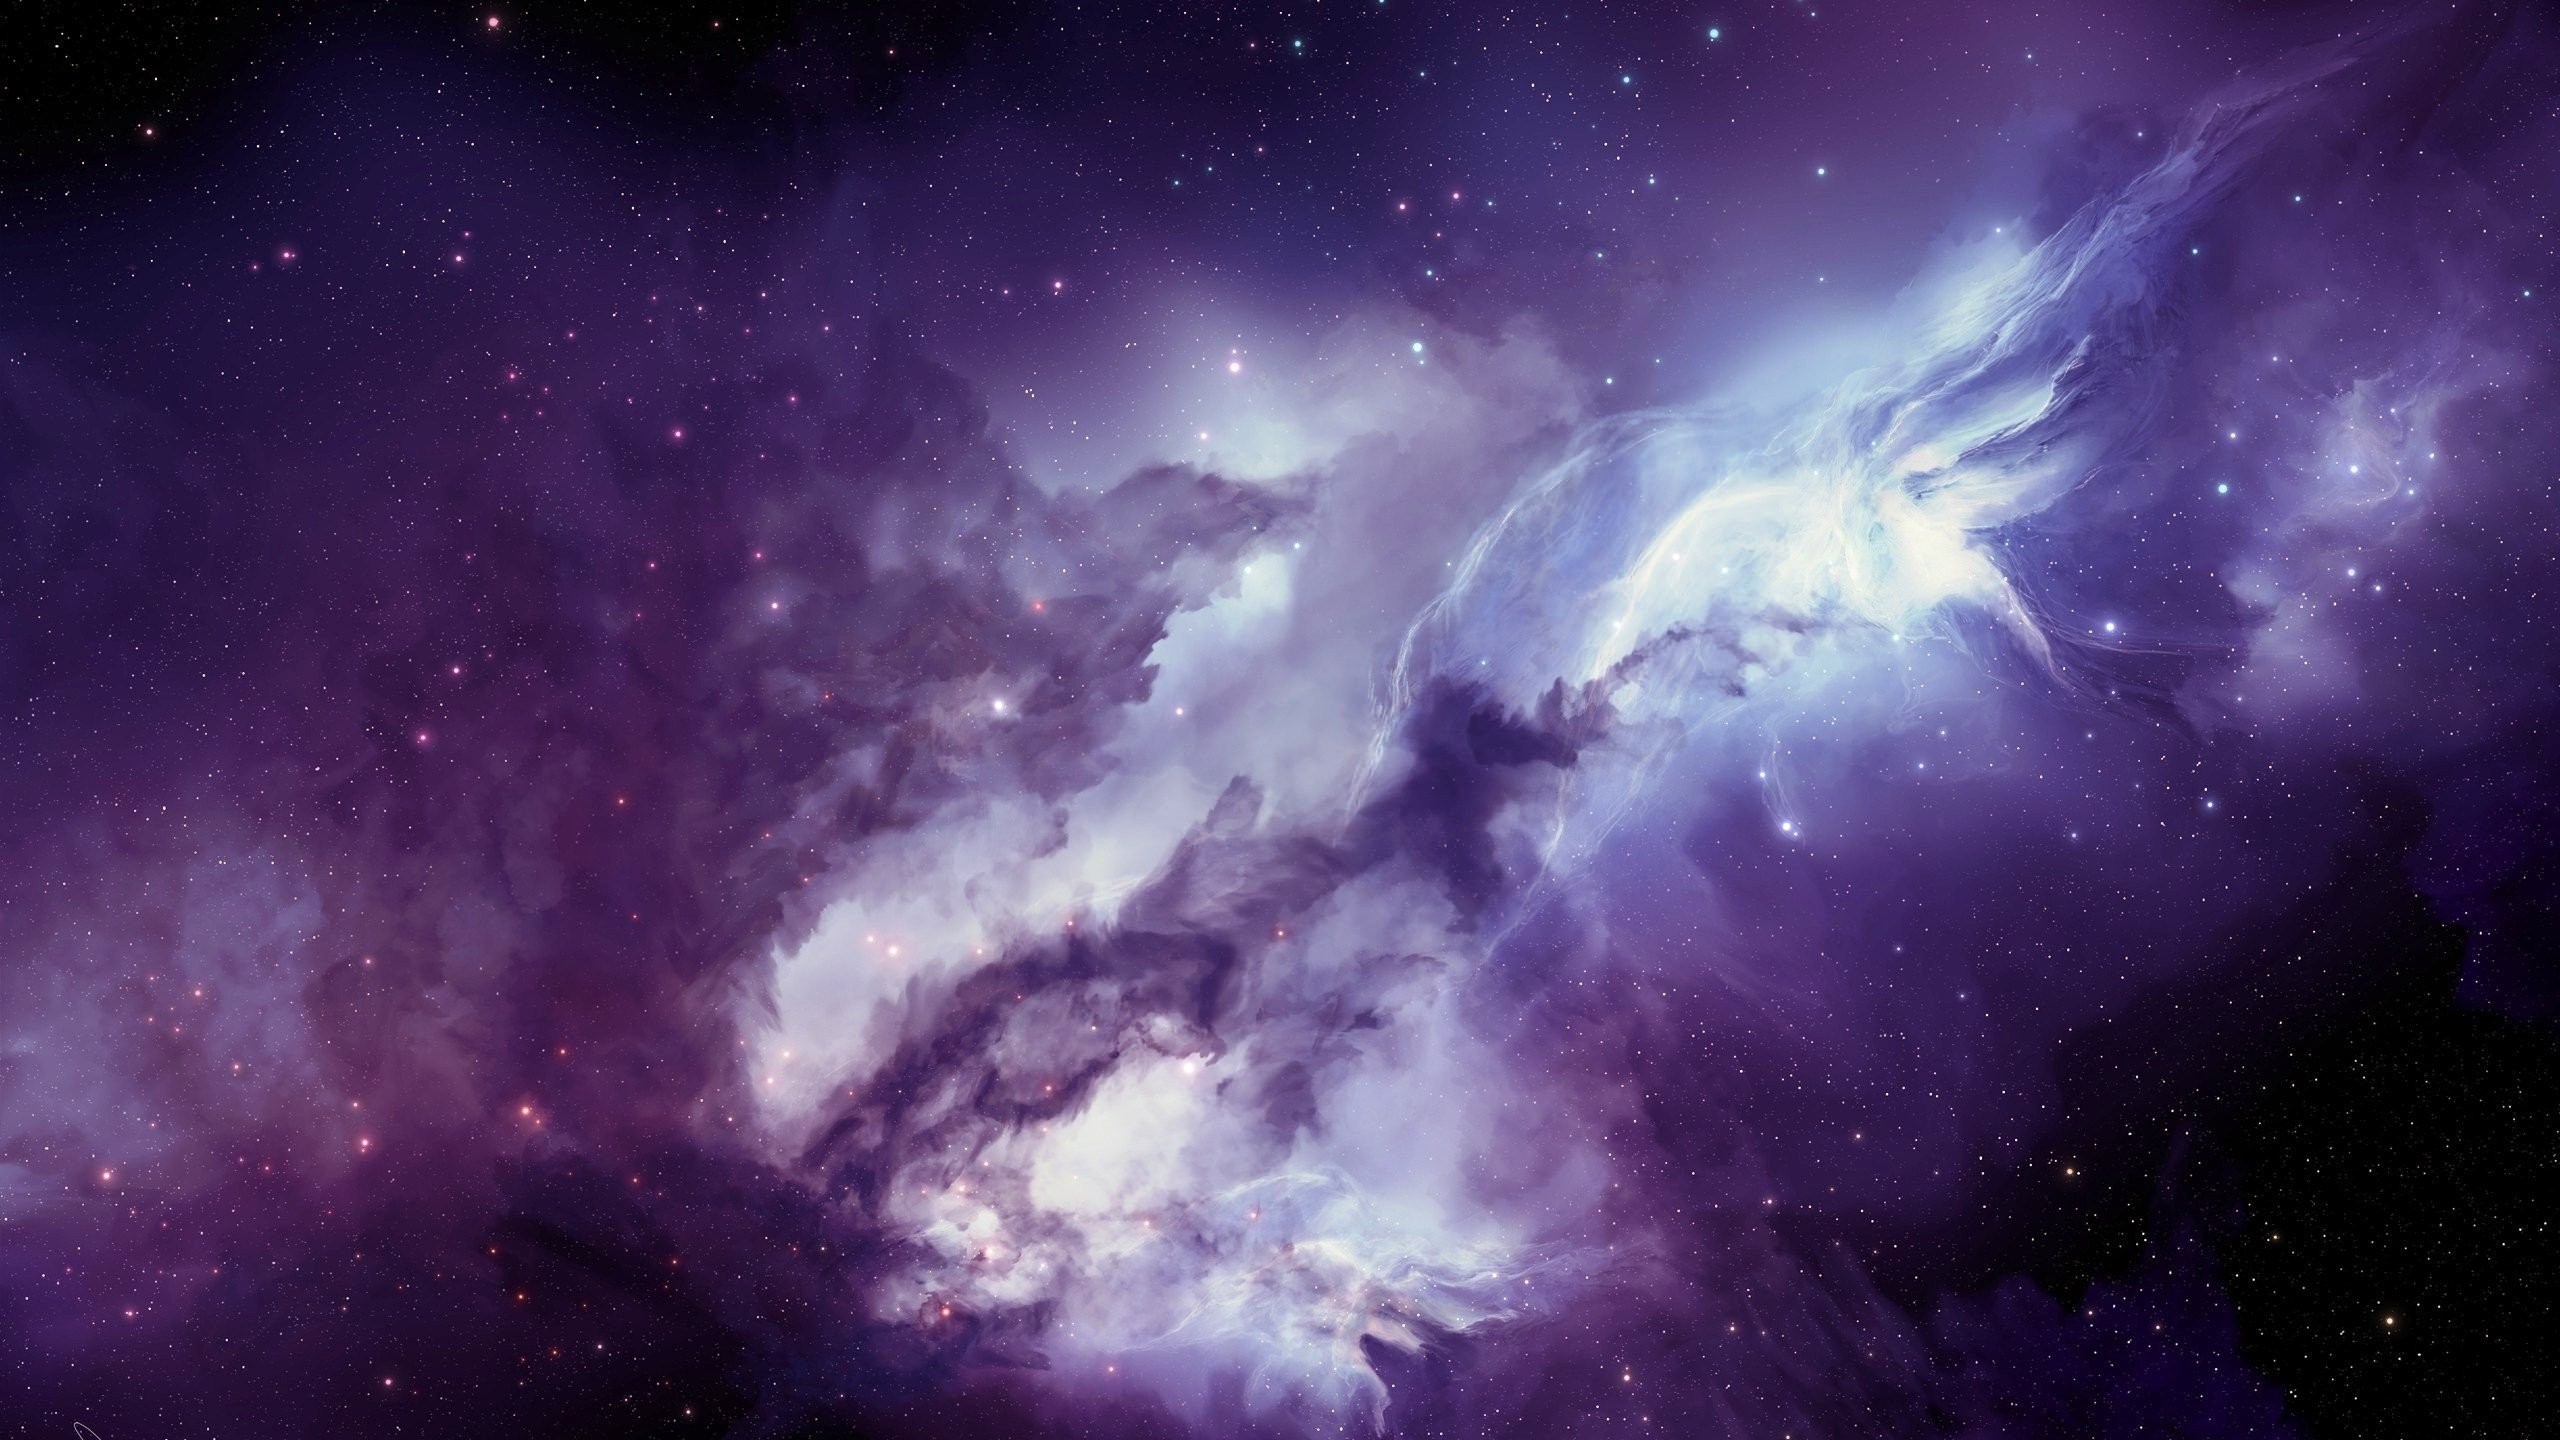 Deep Space Nebula Wallpaper for Social Media YouTube Channel Art